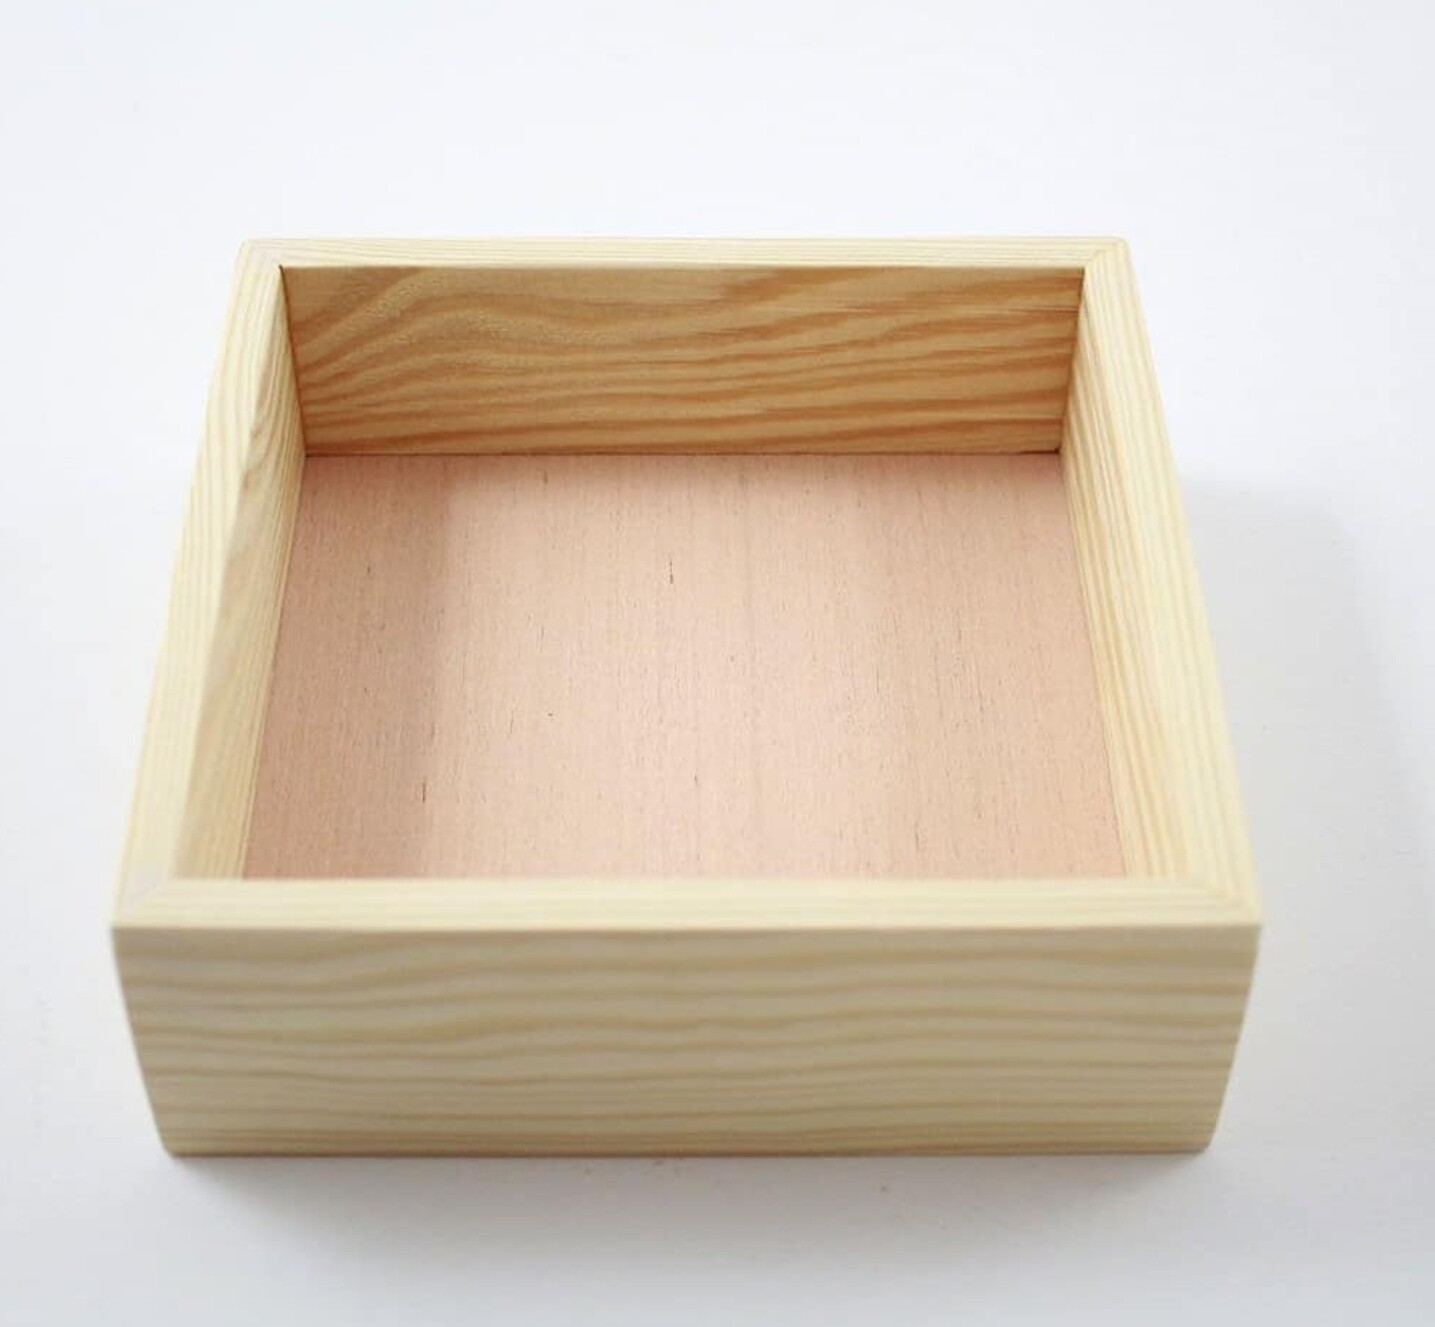 10x10x3 inch Wooden box